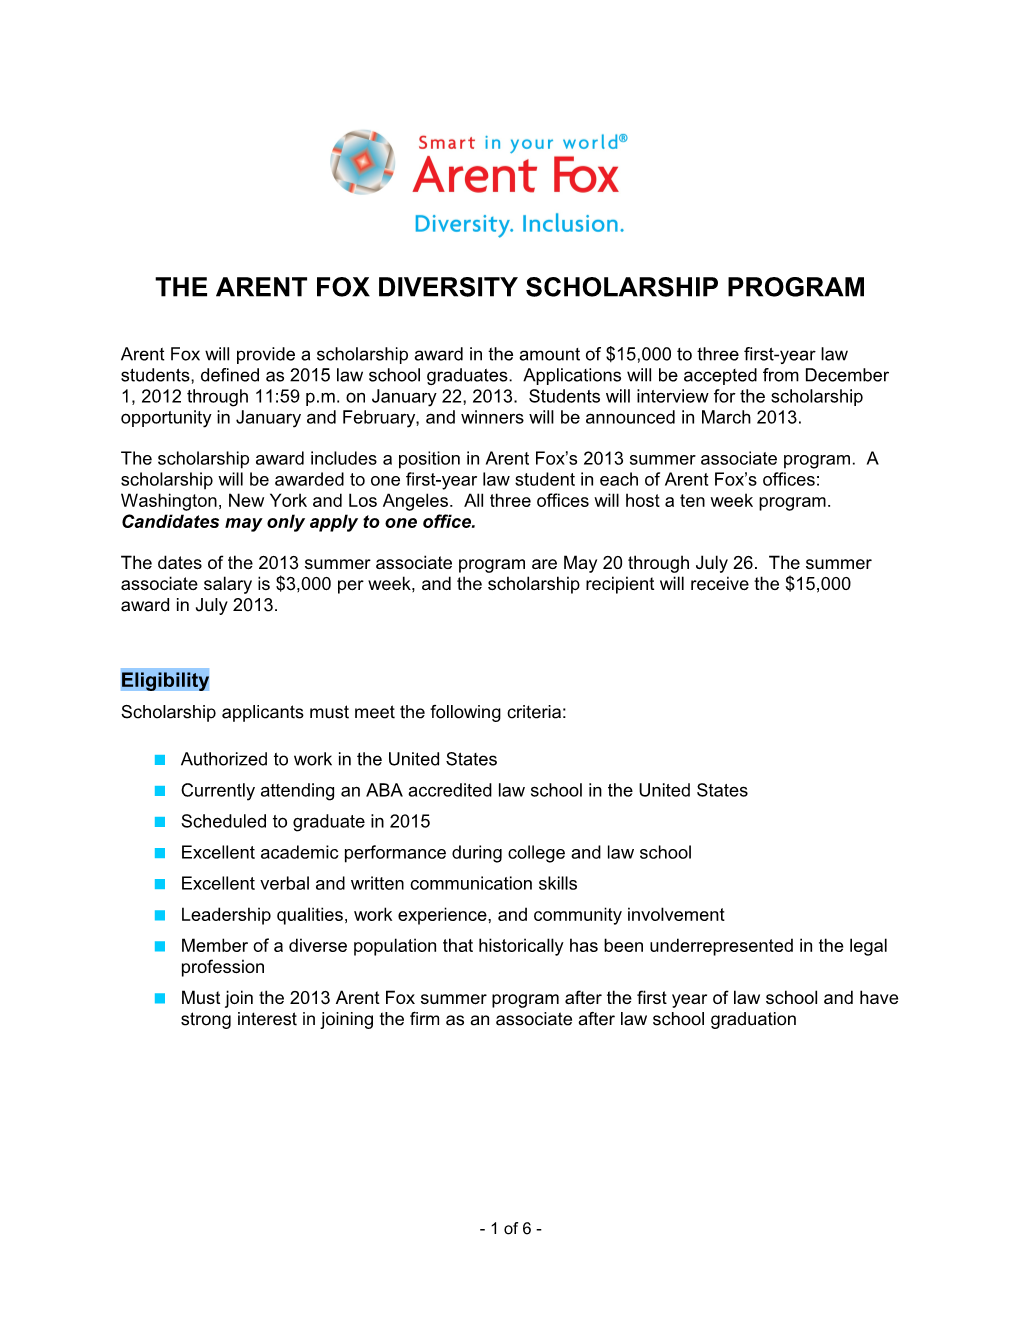 The Arent Fox Diversity Scholarship Program